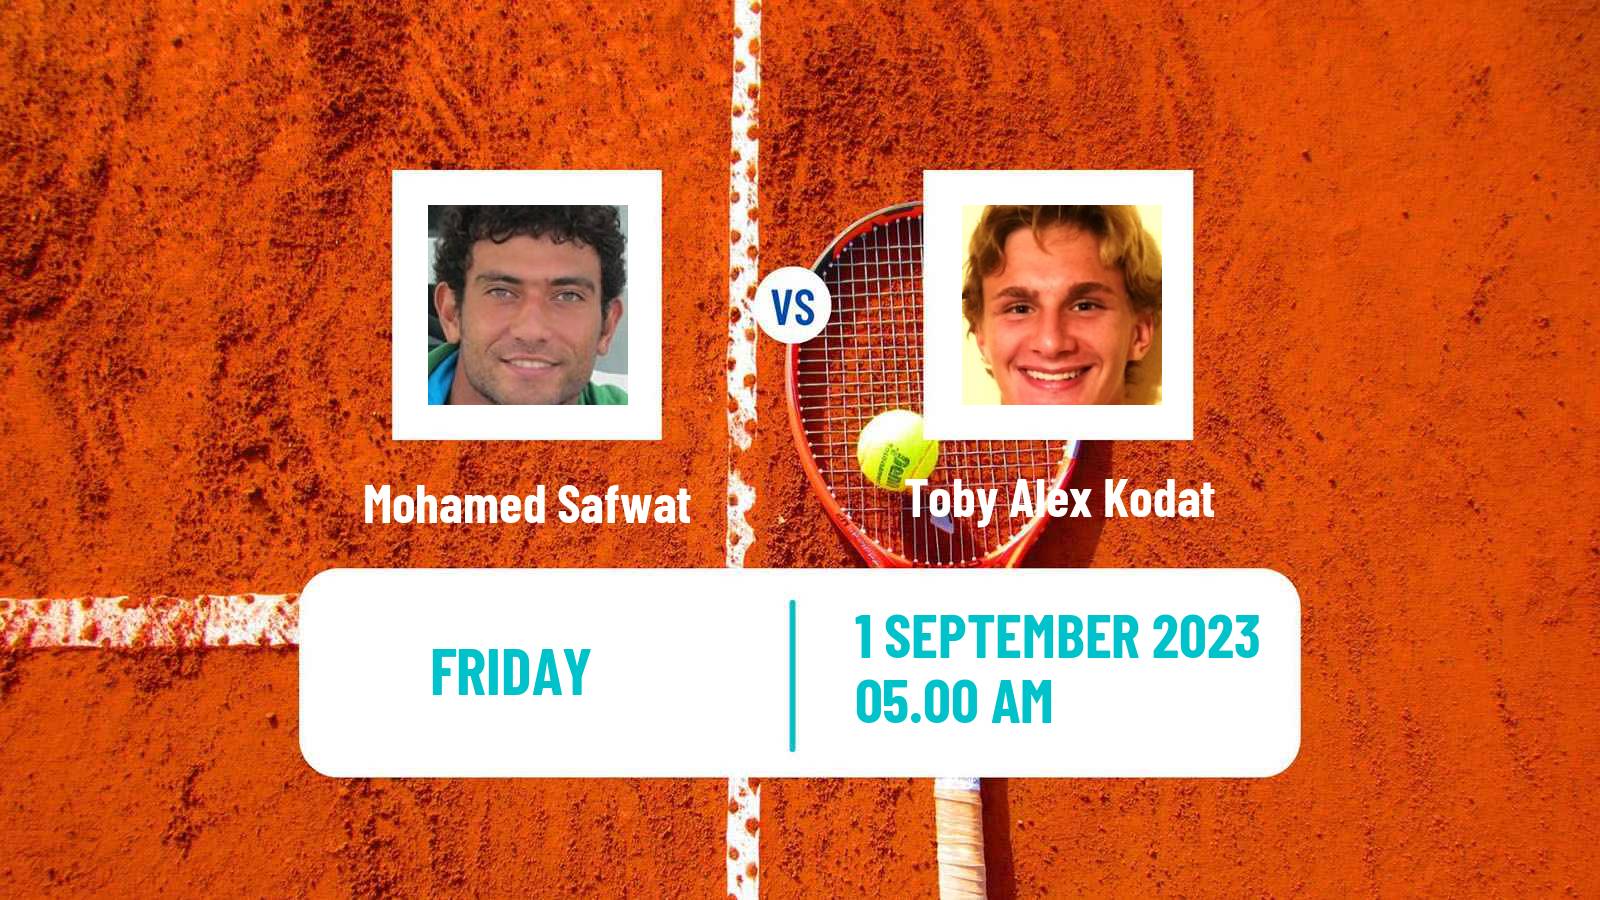 Tennis ITF M25 Jablonec Nad Nisou 2 Men Mohamed Safwat - Toby Alex Kodat